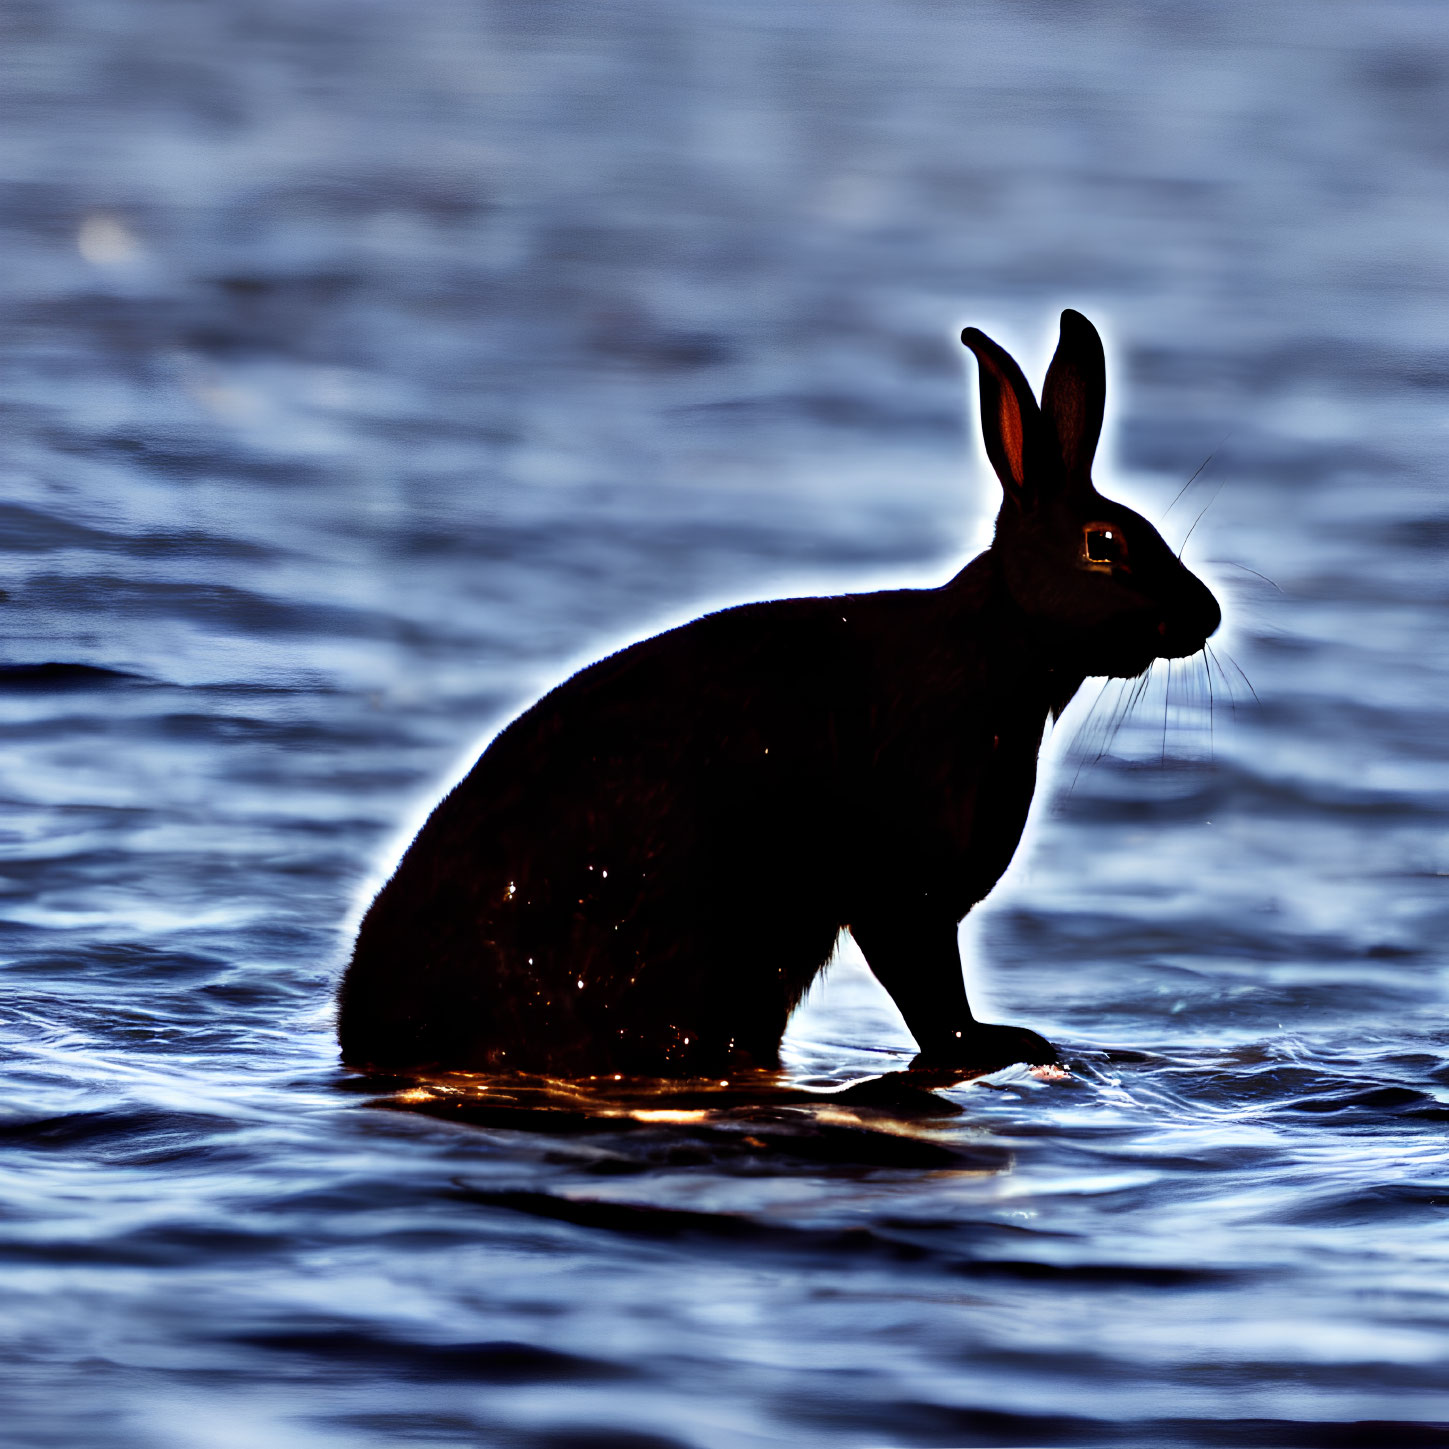 Rabbit silhouette in shallow water under sunlight